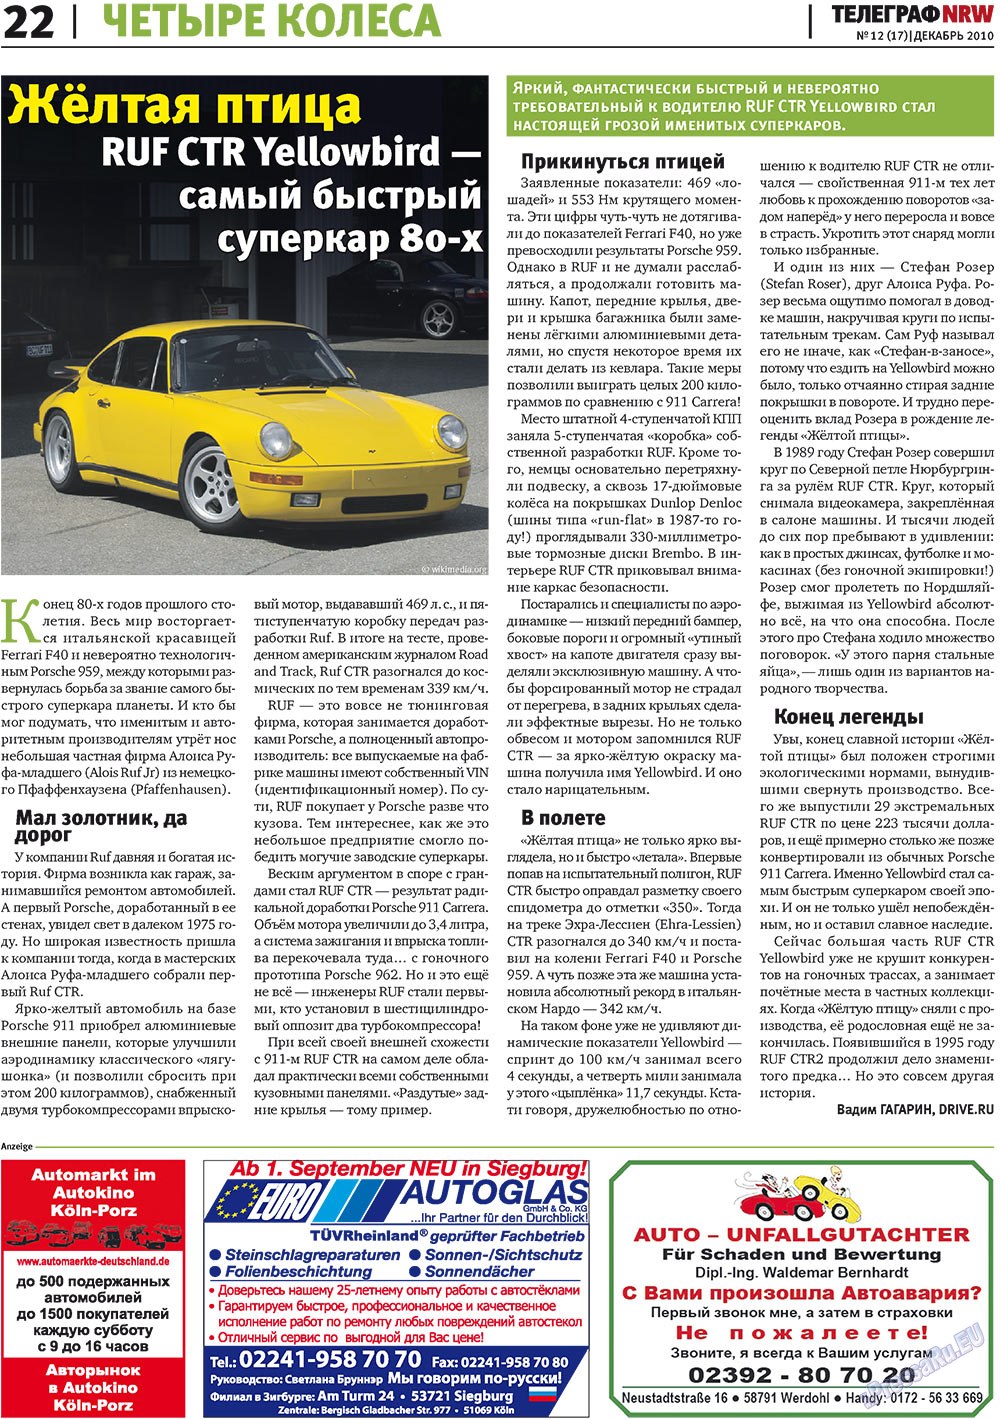 Телеграф NRW, газета. 2010 №12 стр.22